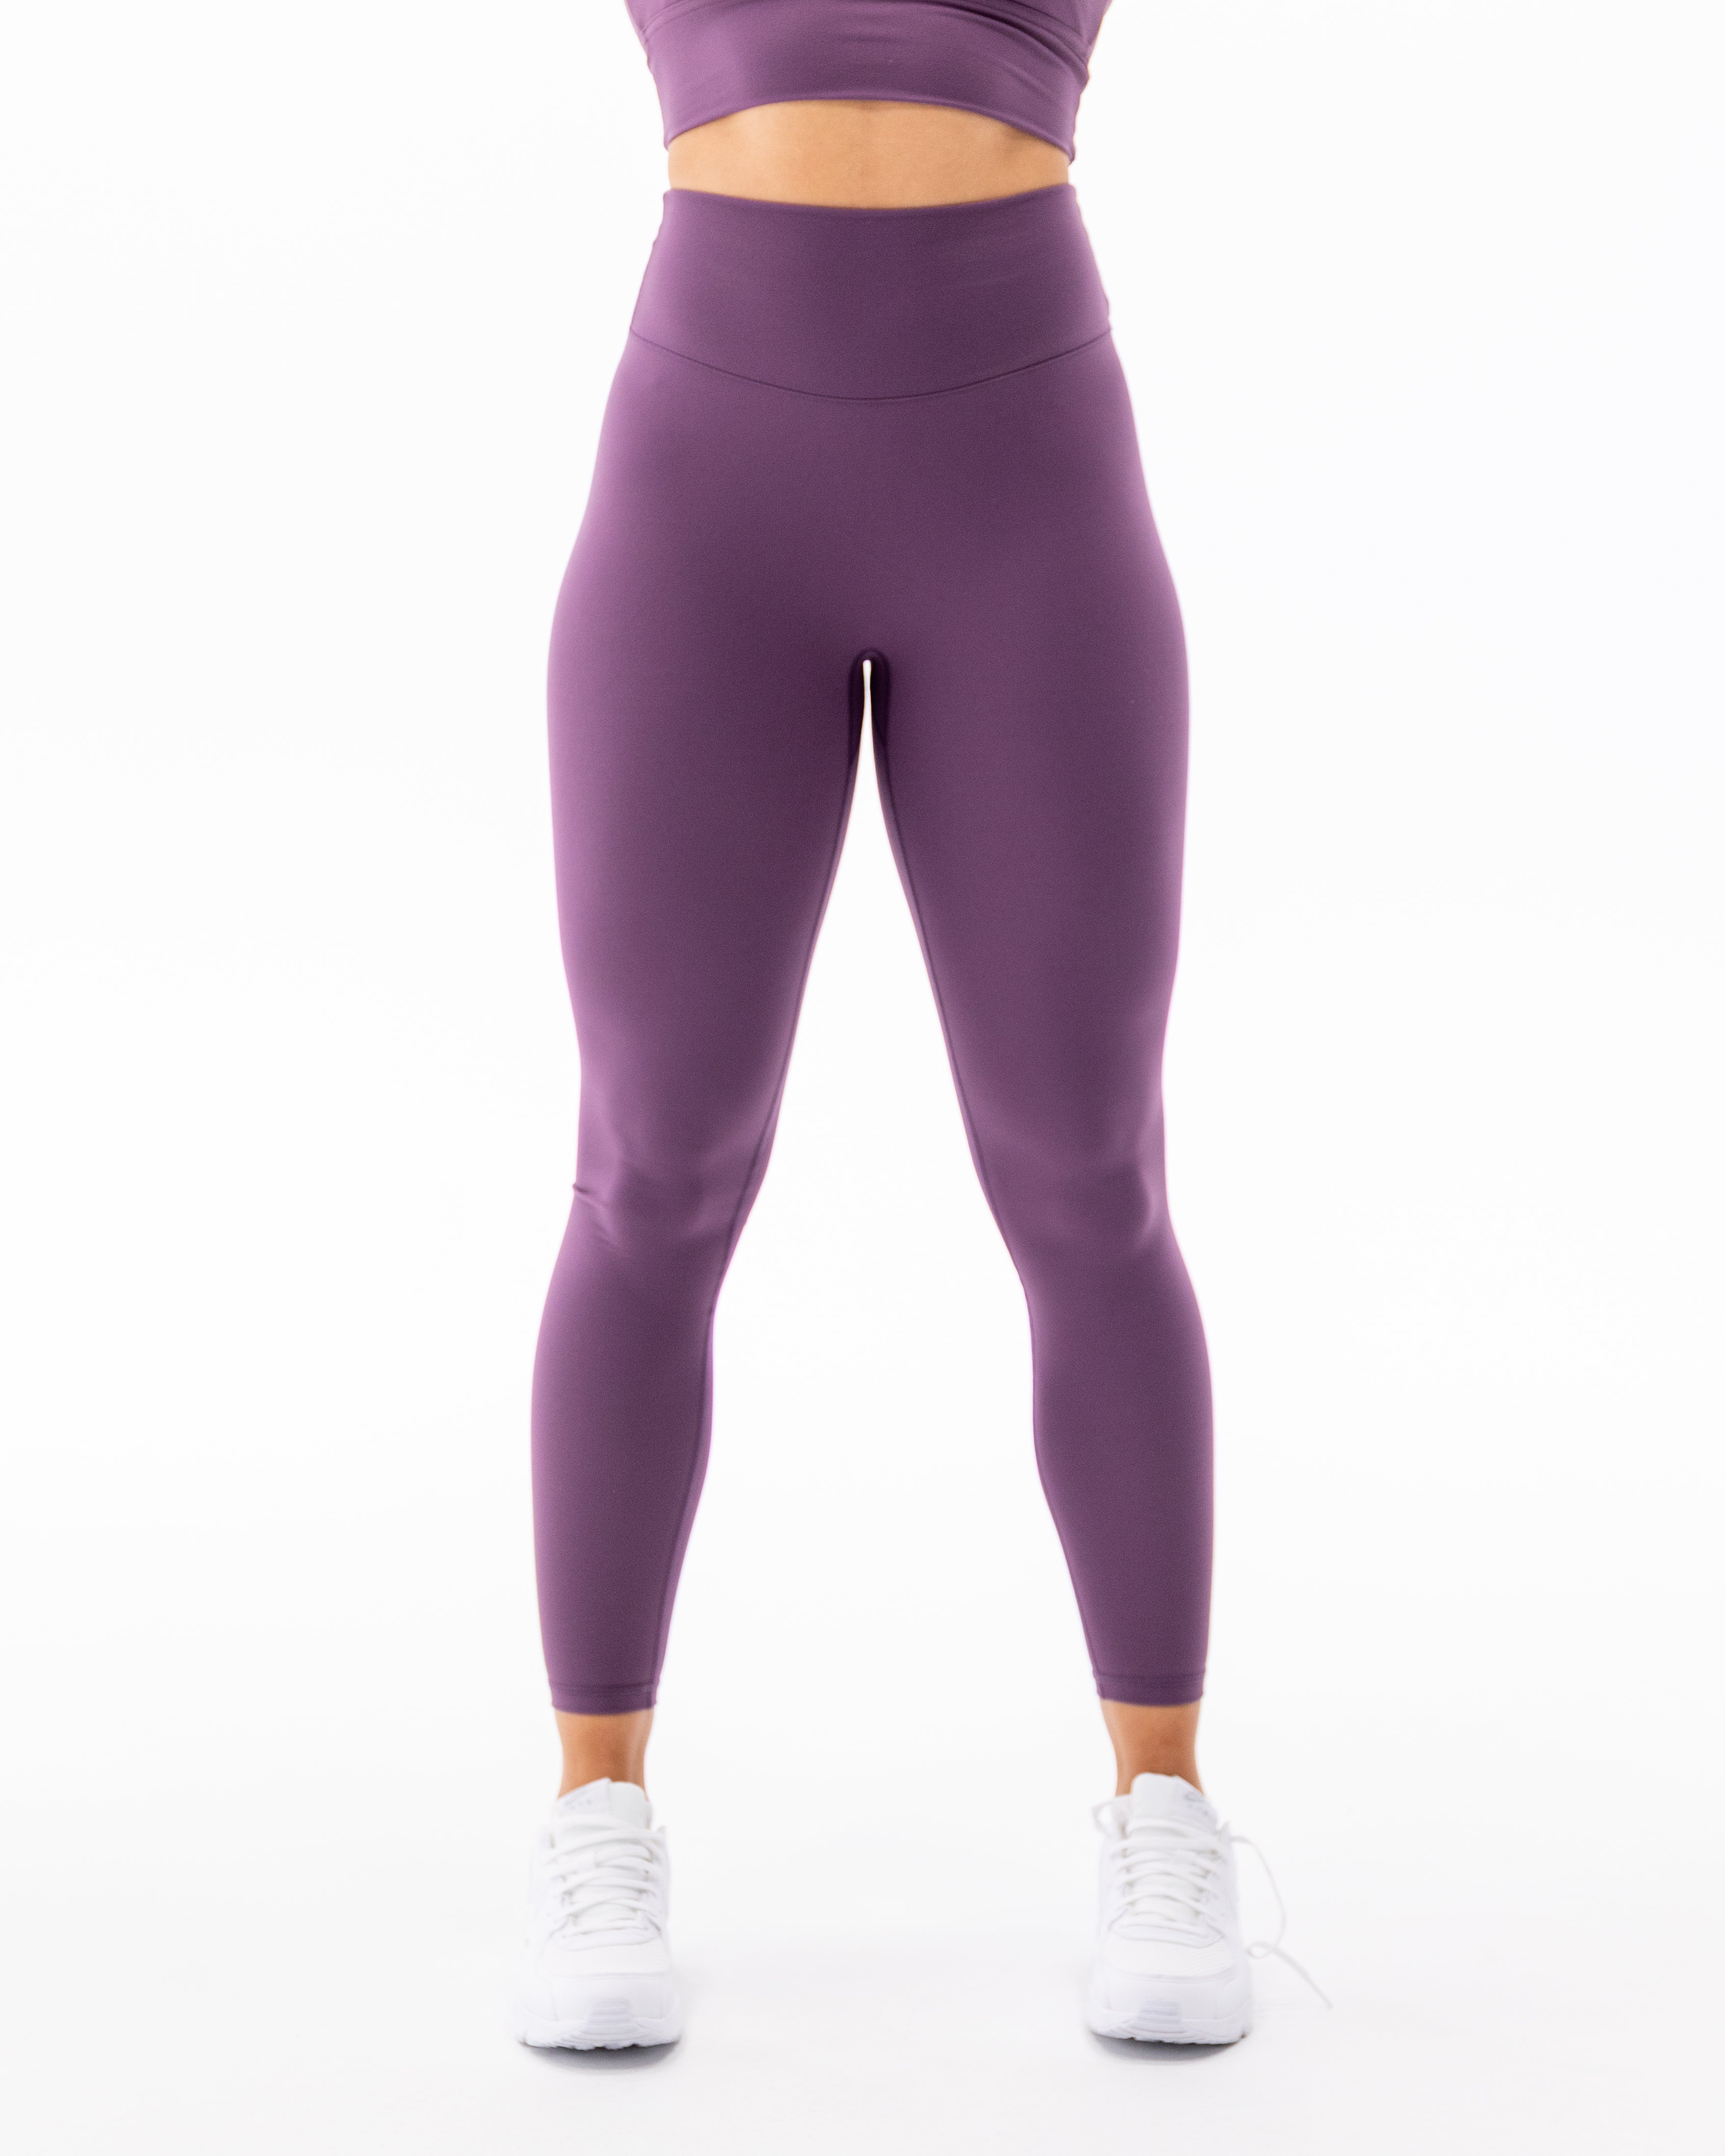 Ptula Legging (capri) in purple GRAPE for the #gym - Depop